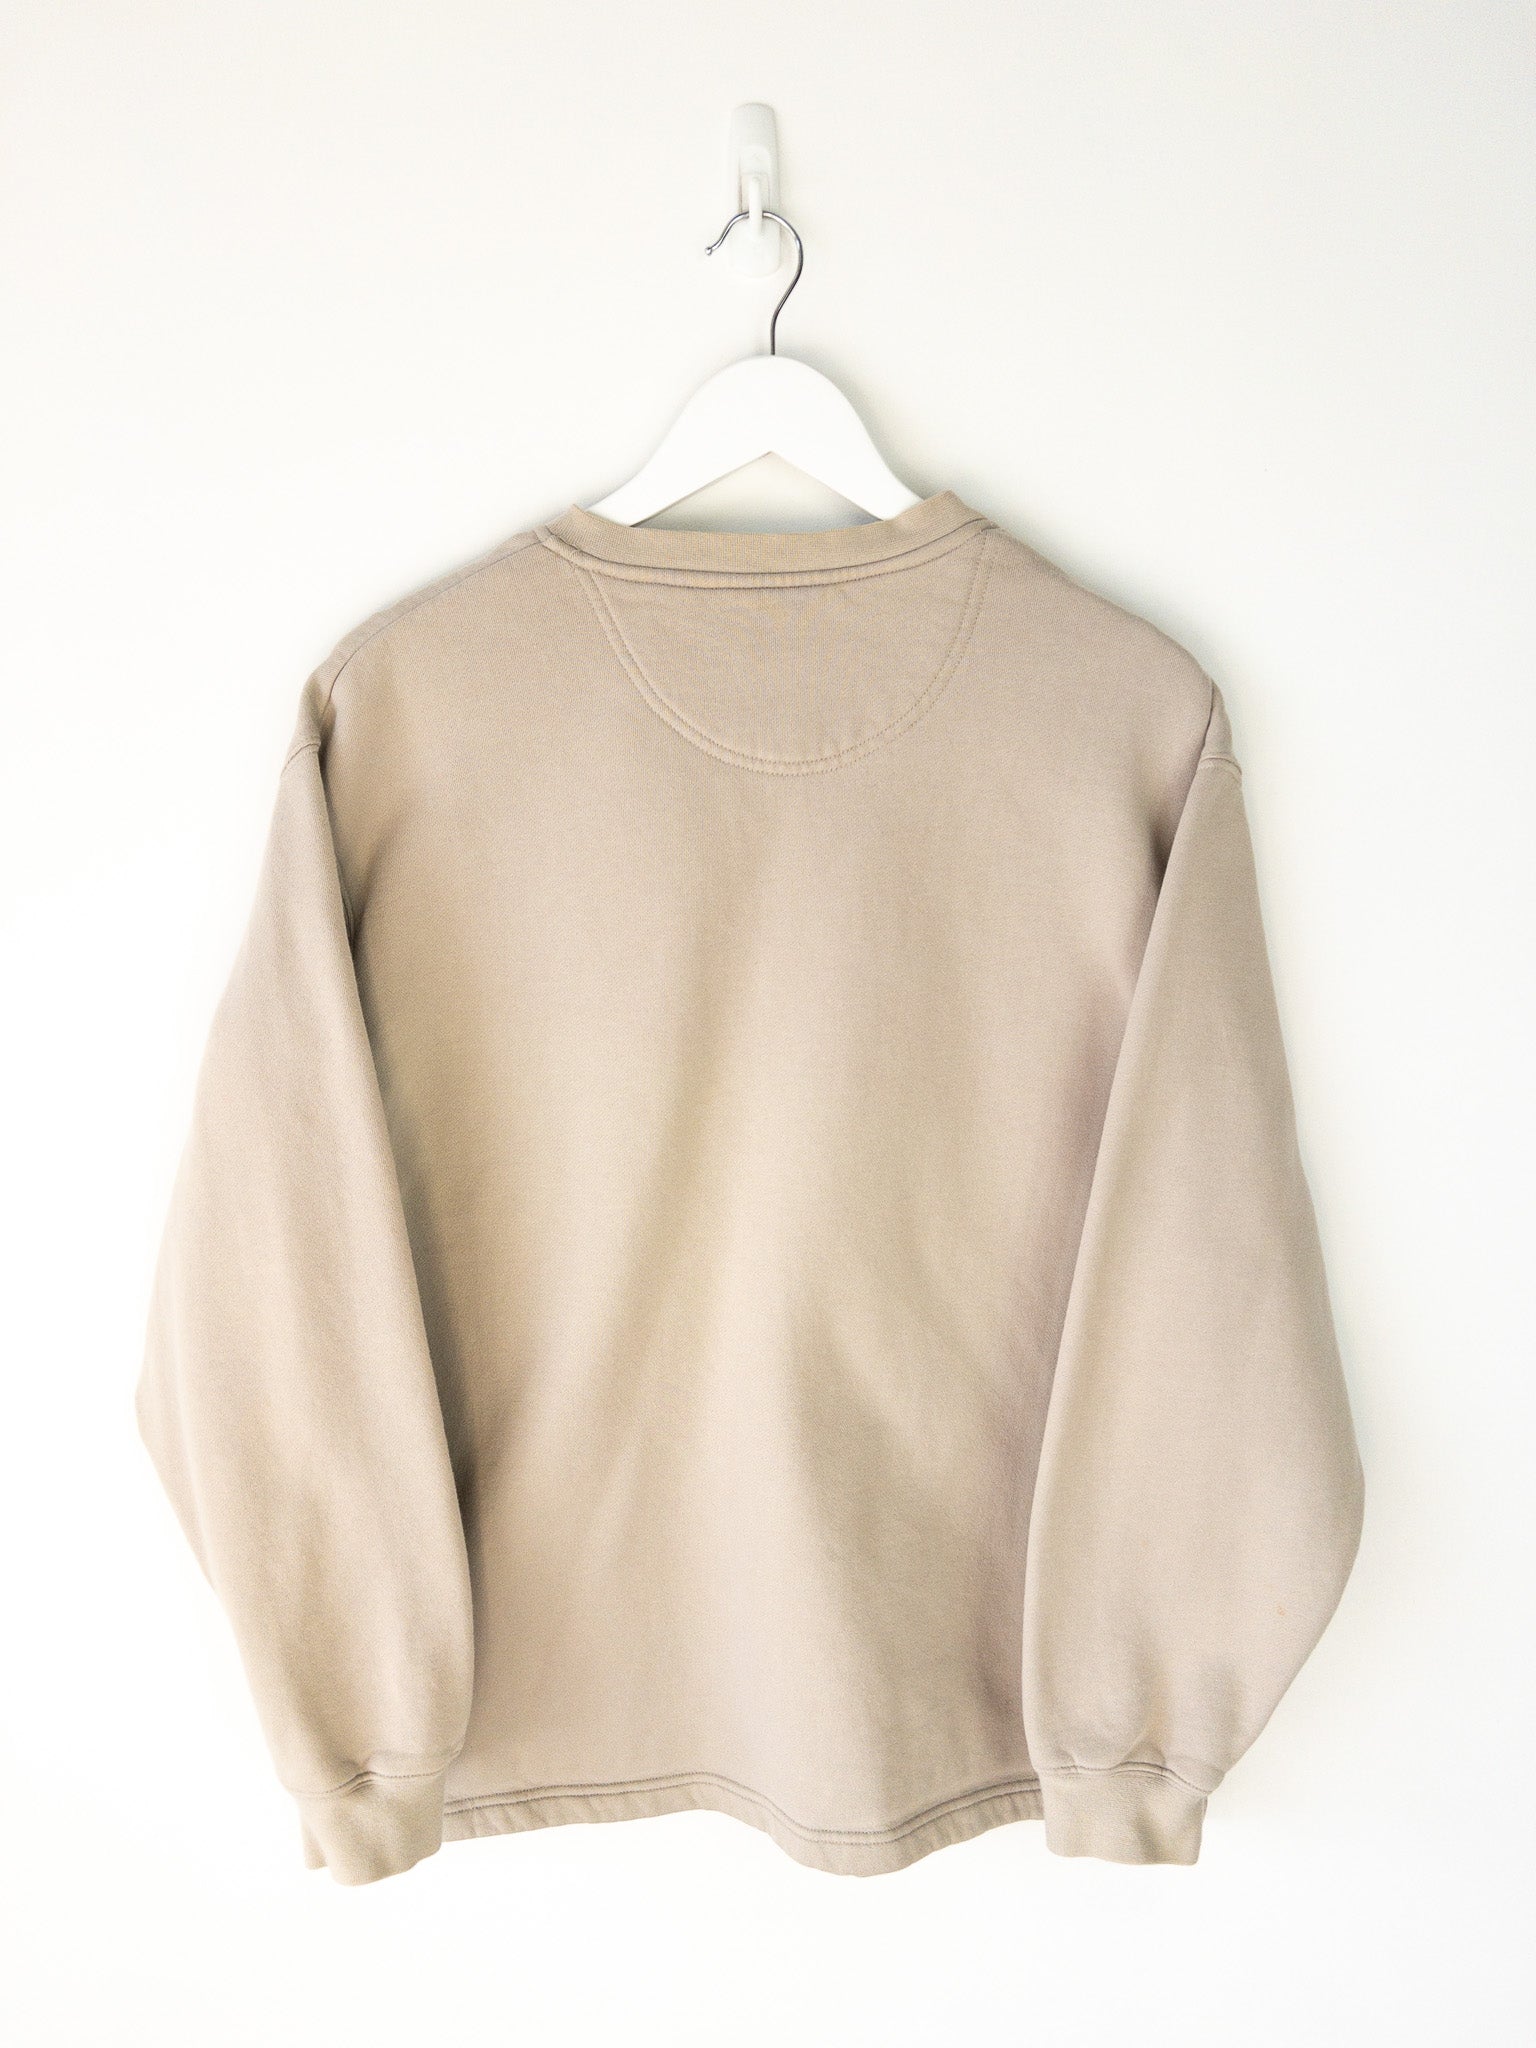 Vintage Schott N.Y.C Sweatshirt (XL)